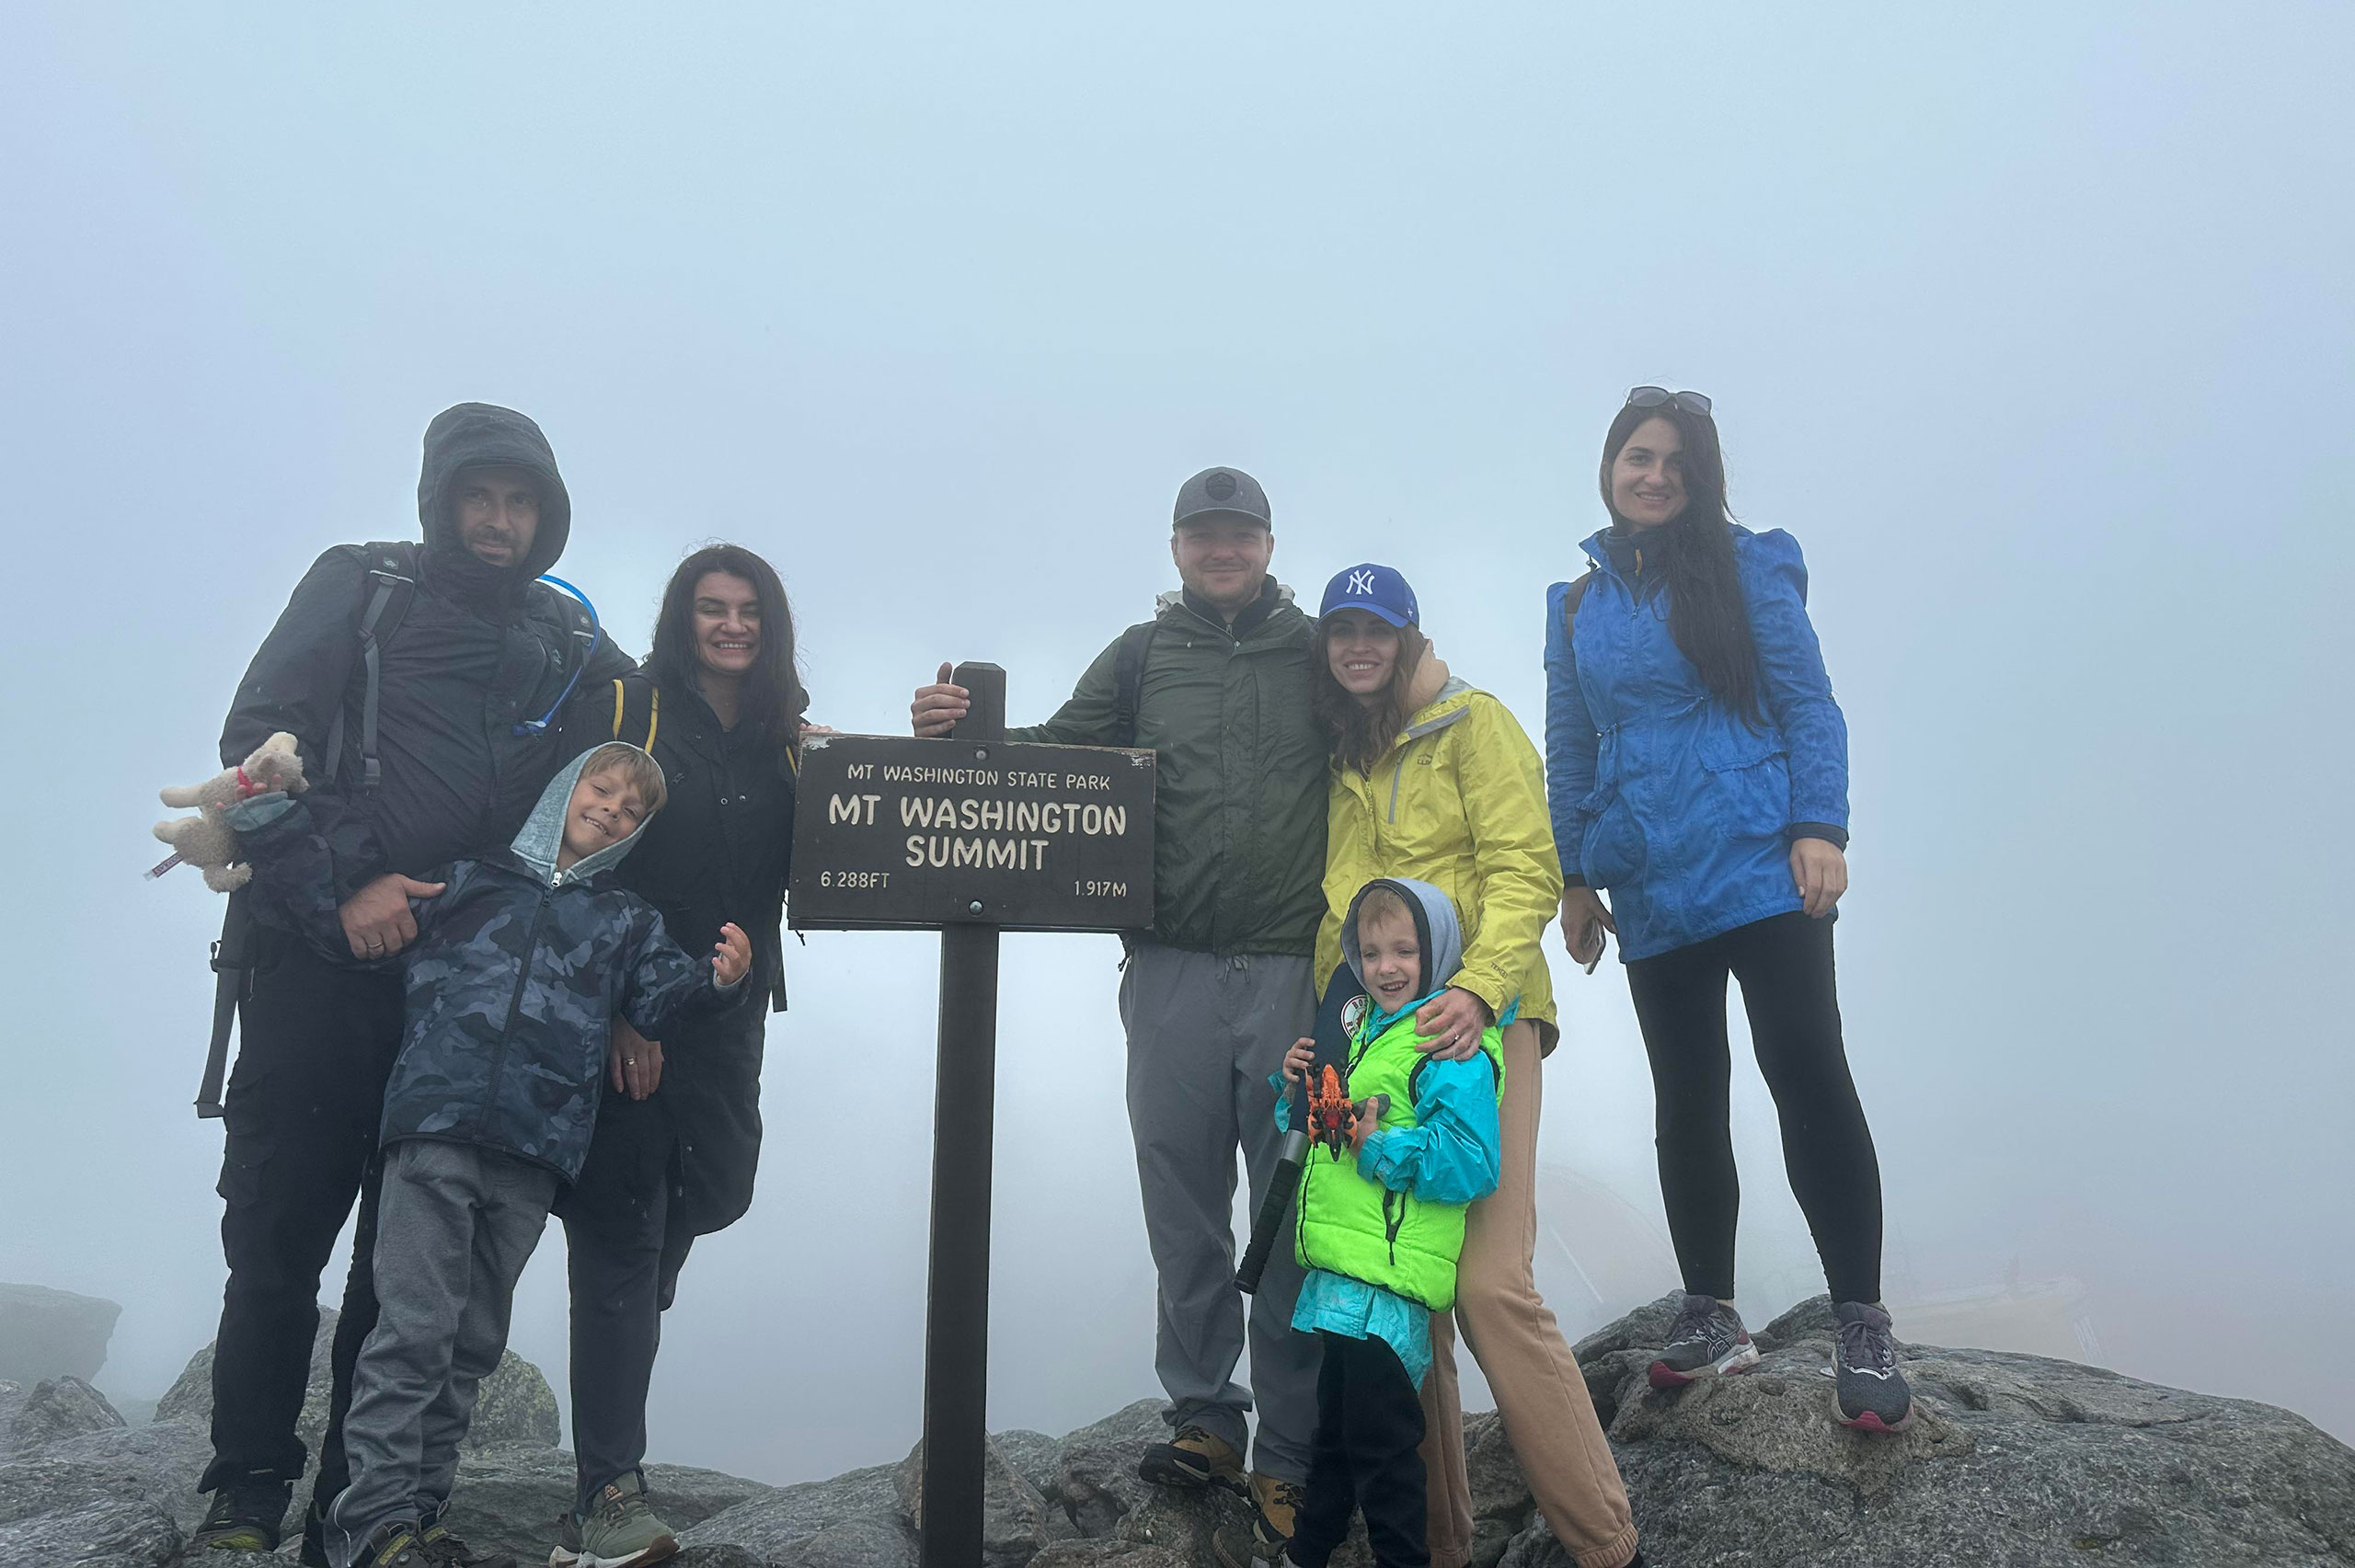 Hikers atop Mount Washington summit